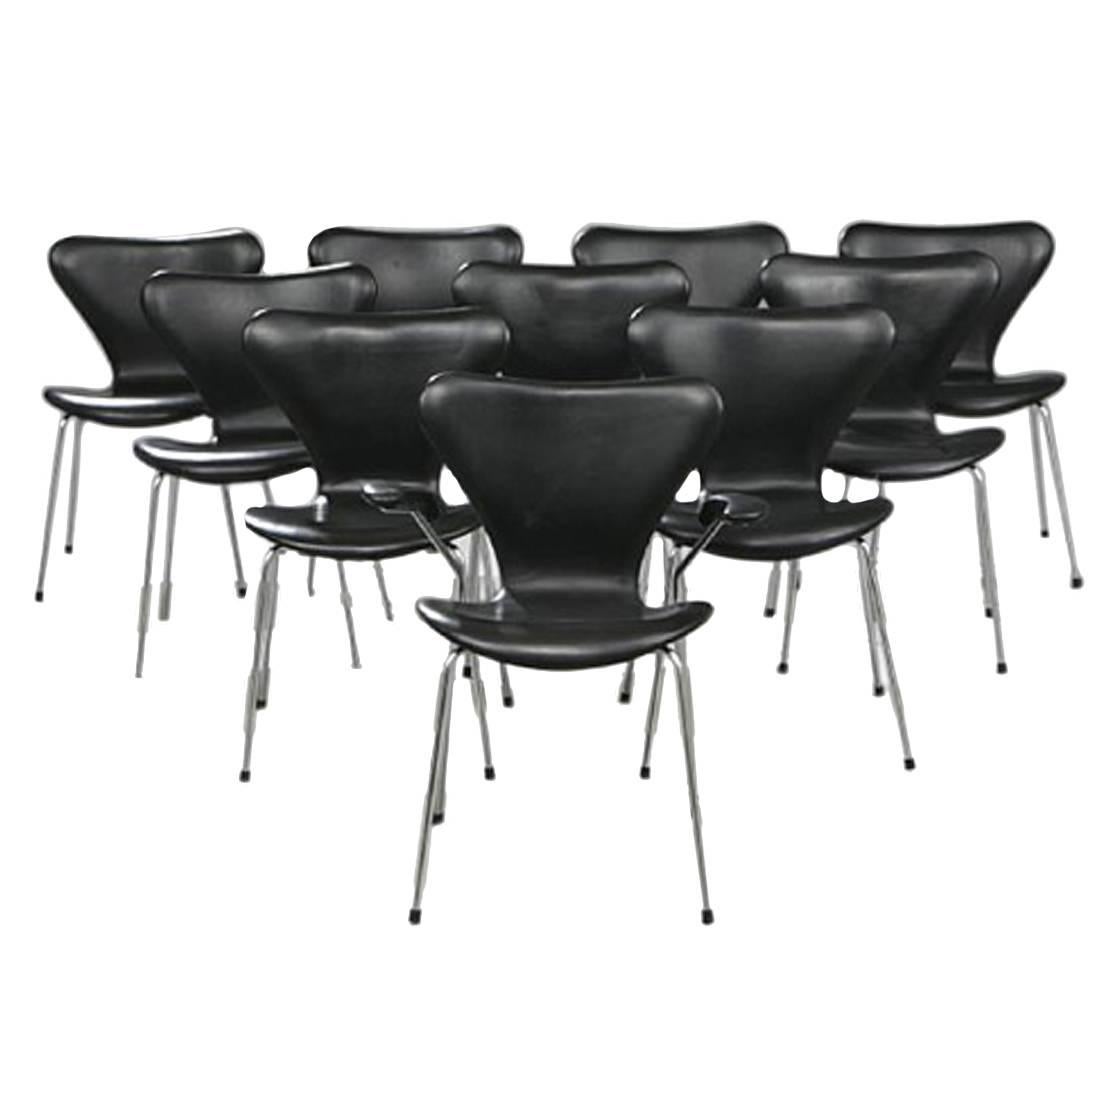 Ten "Series 7" Chairs Arne Jacobsen by Fritz Hansen, Black Leather